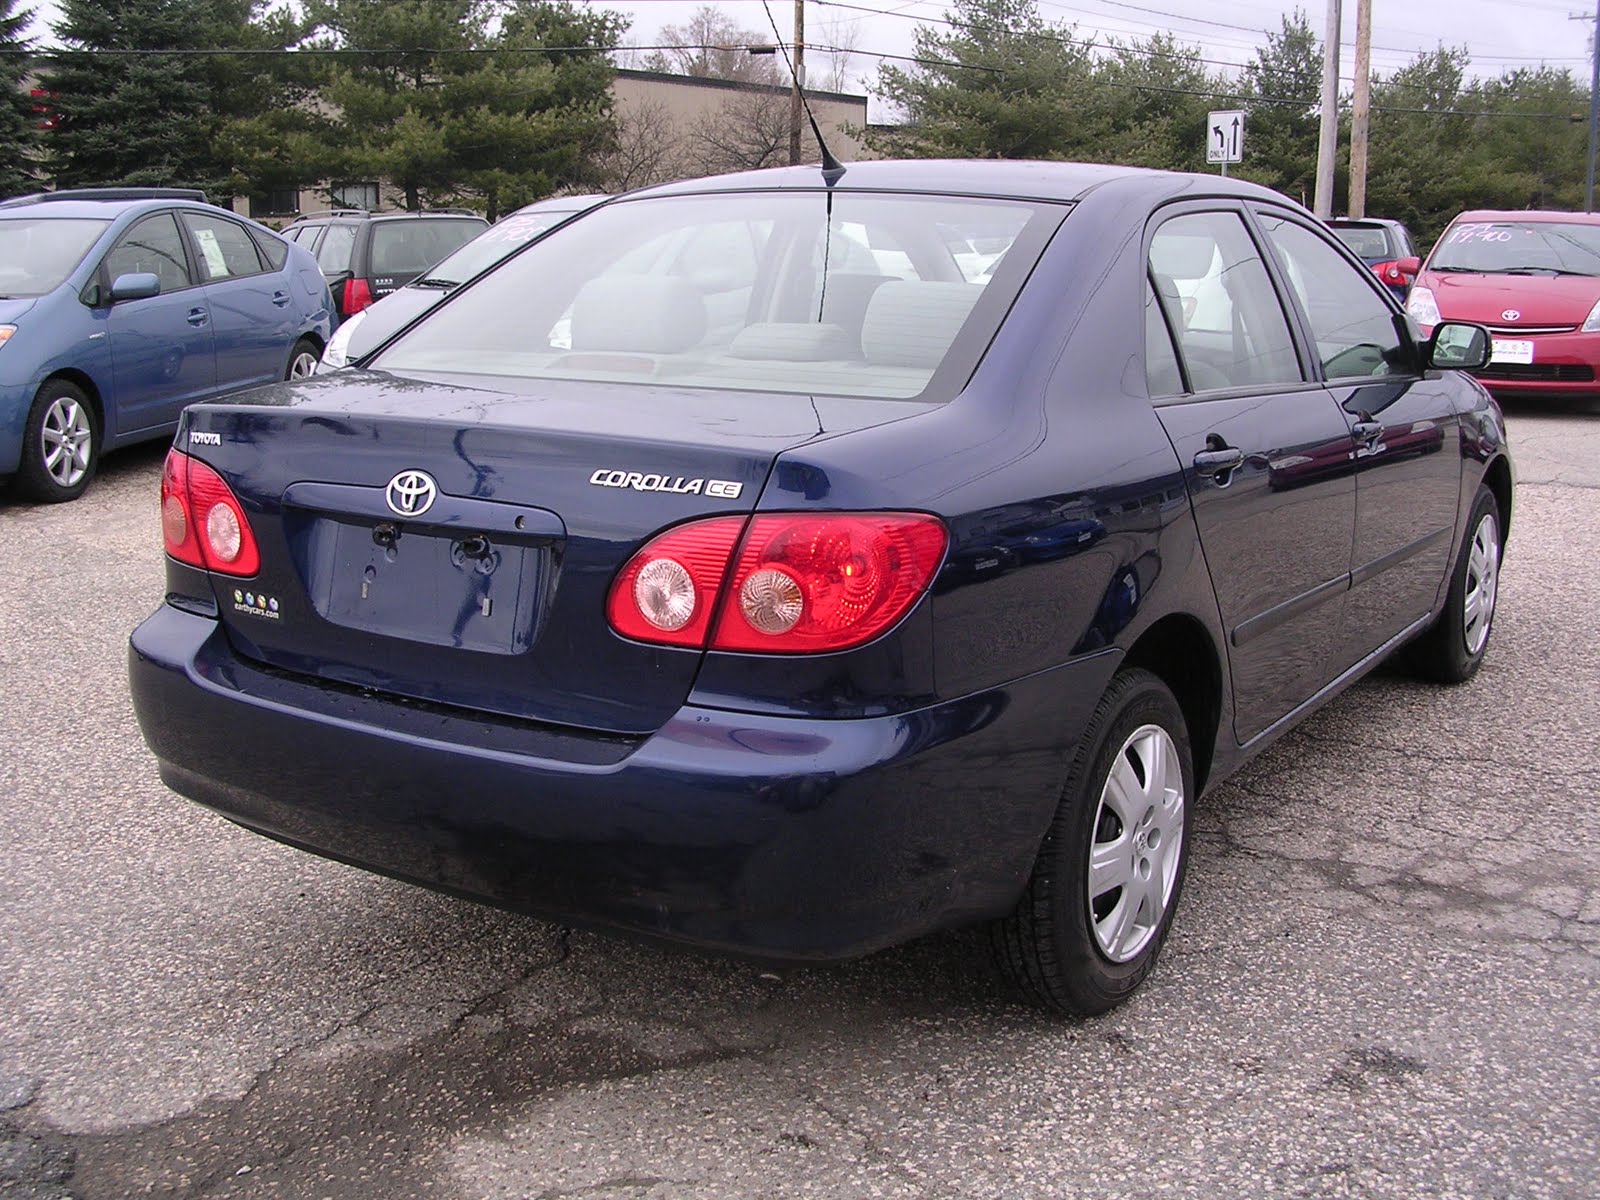 Earthy Cars Blog: EARTHY CAR OF THE WEEK: 2005 Blue Toyota Corolla